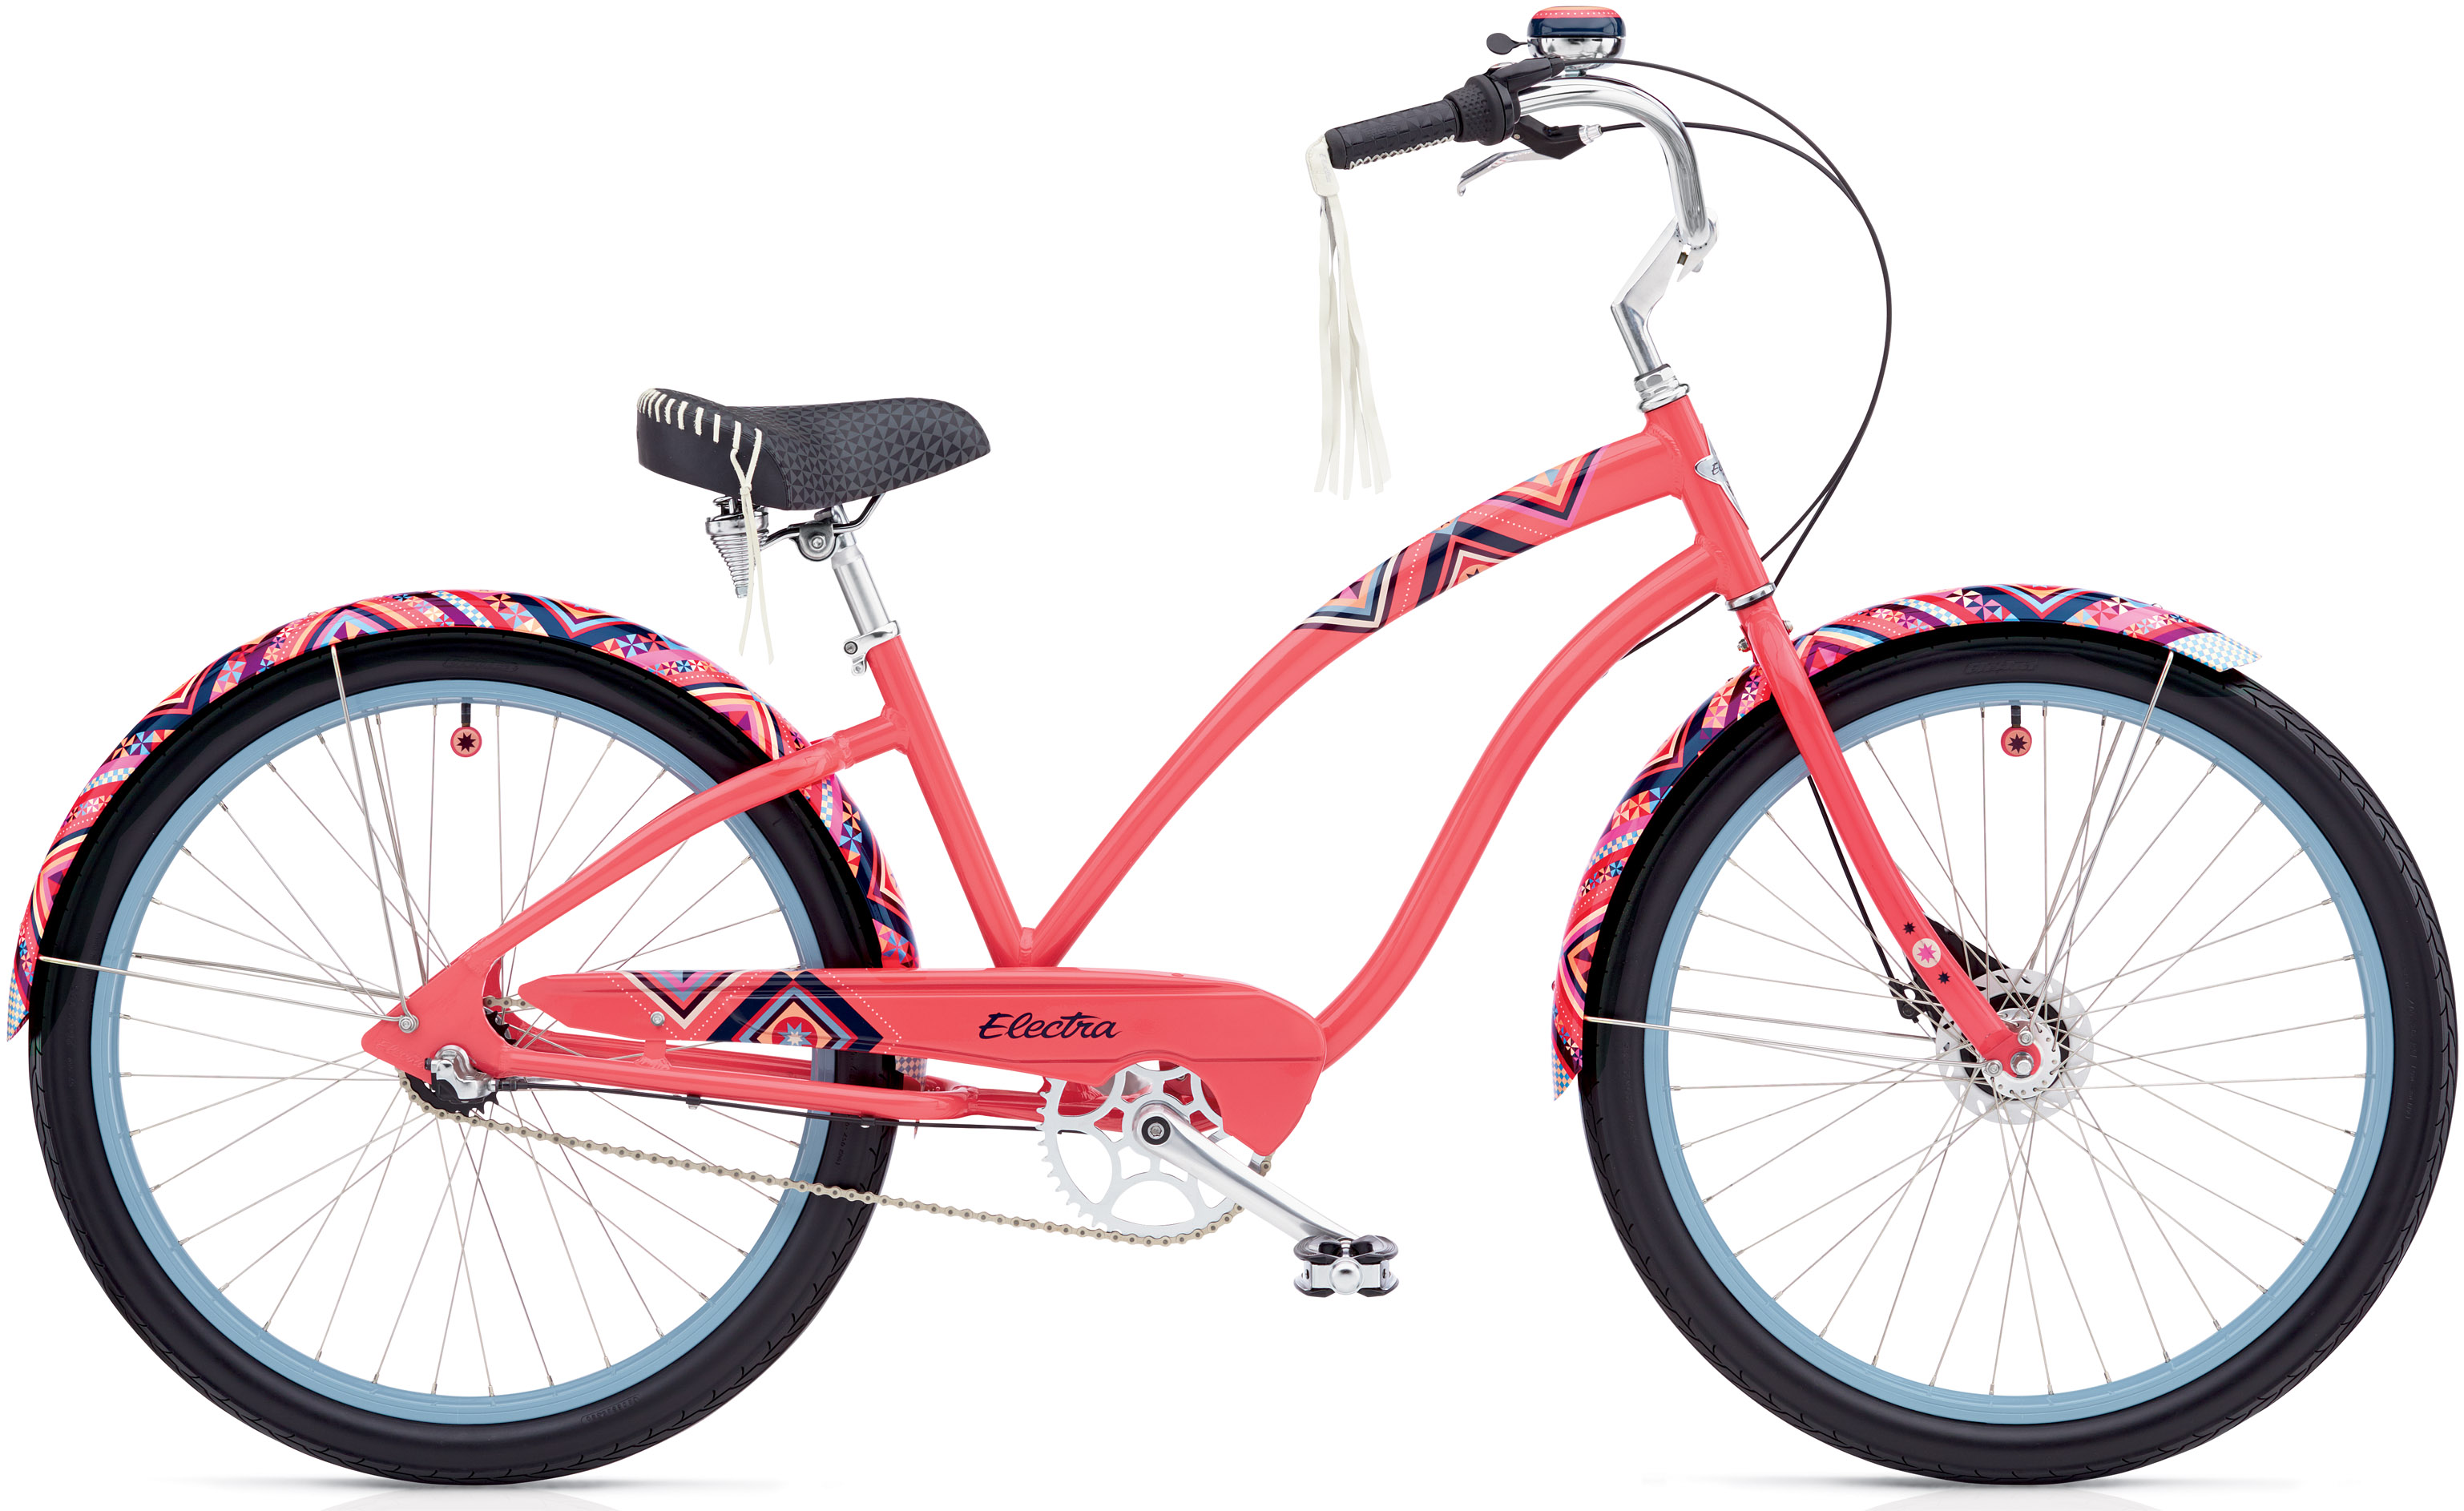  Велосипед Electra Morning Star 3i 2020